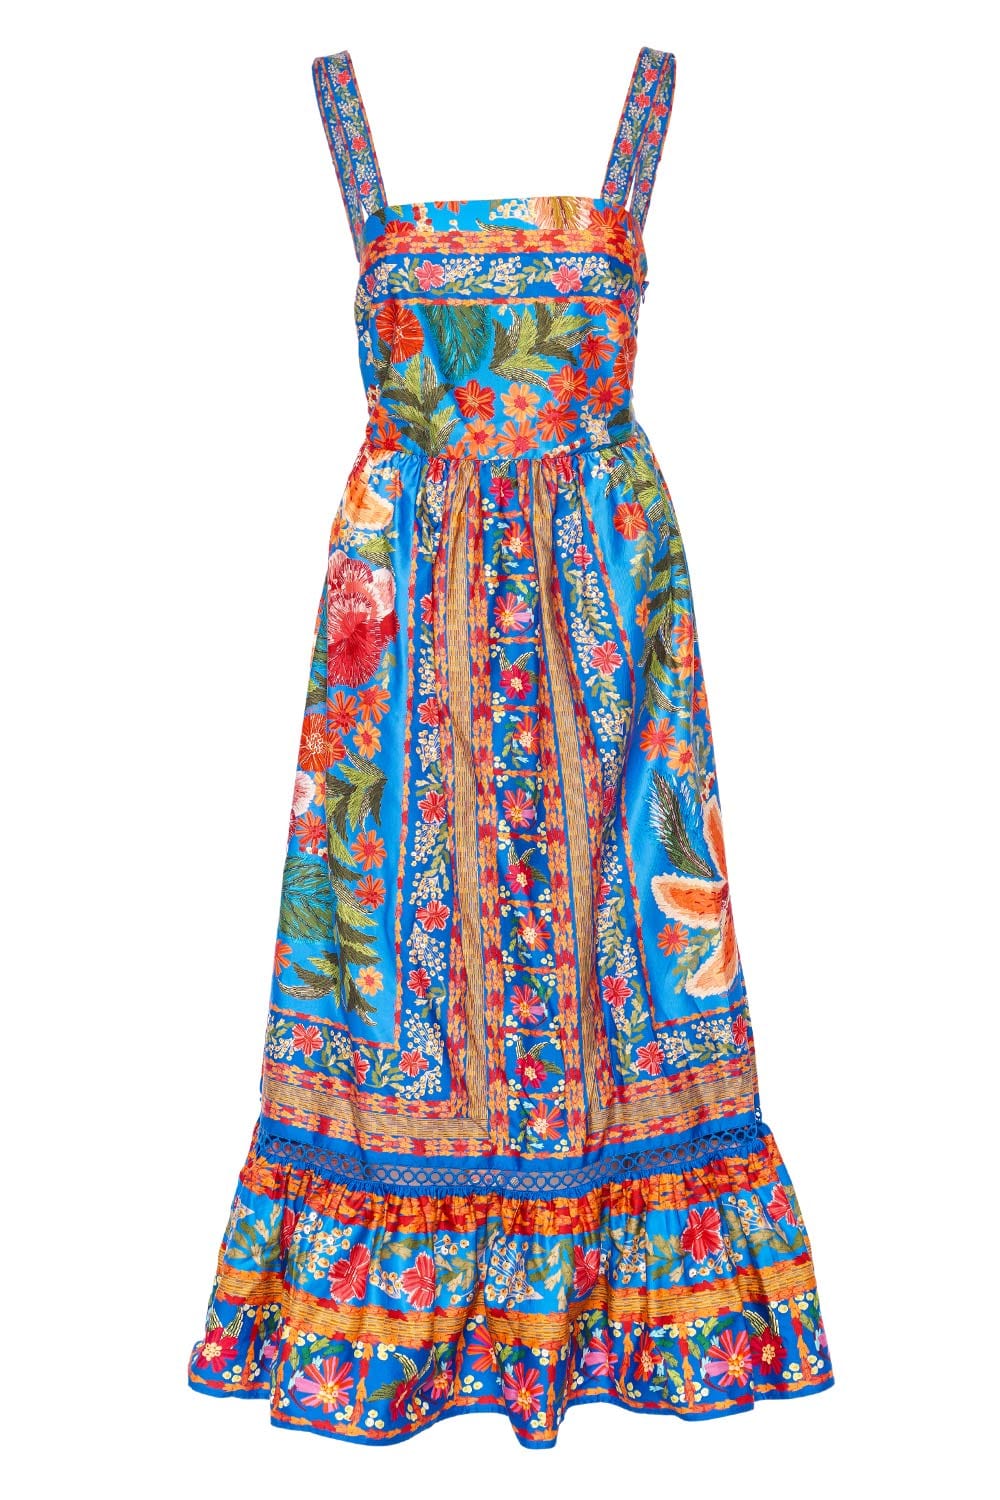 FARM Rio Stitched Garden Blue Midi Dress